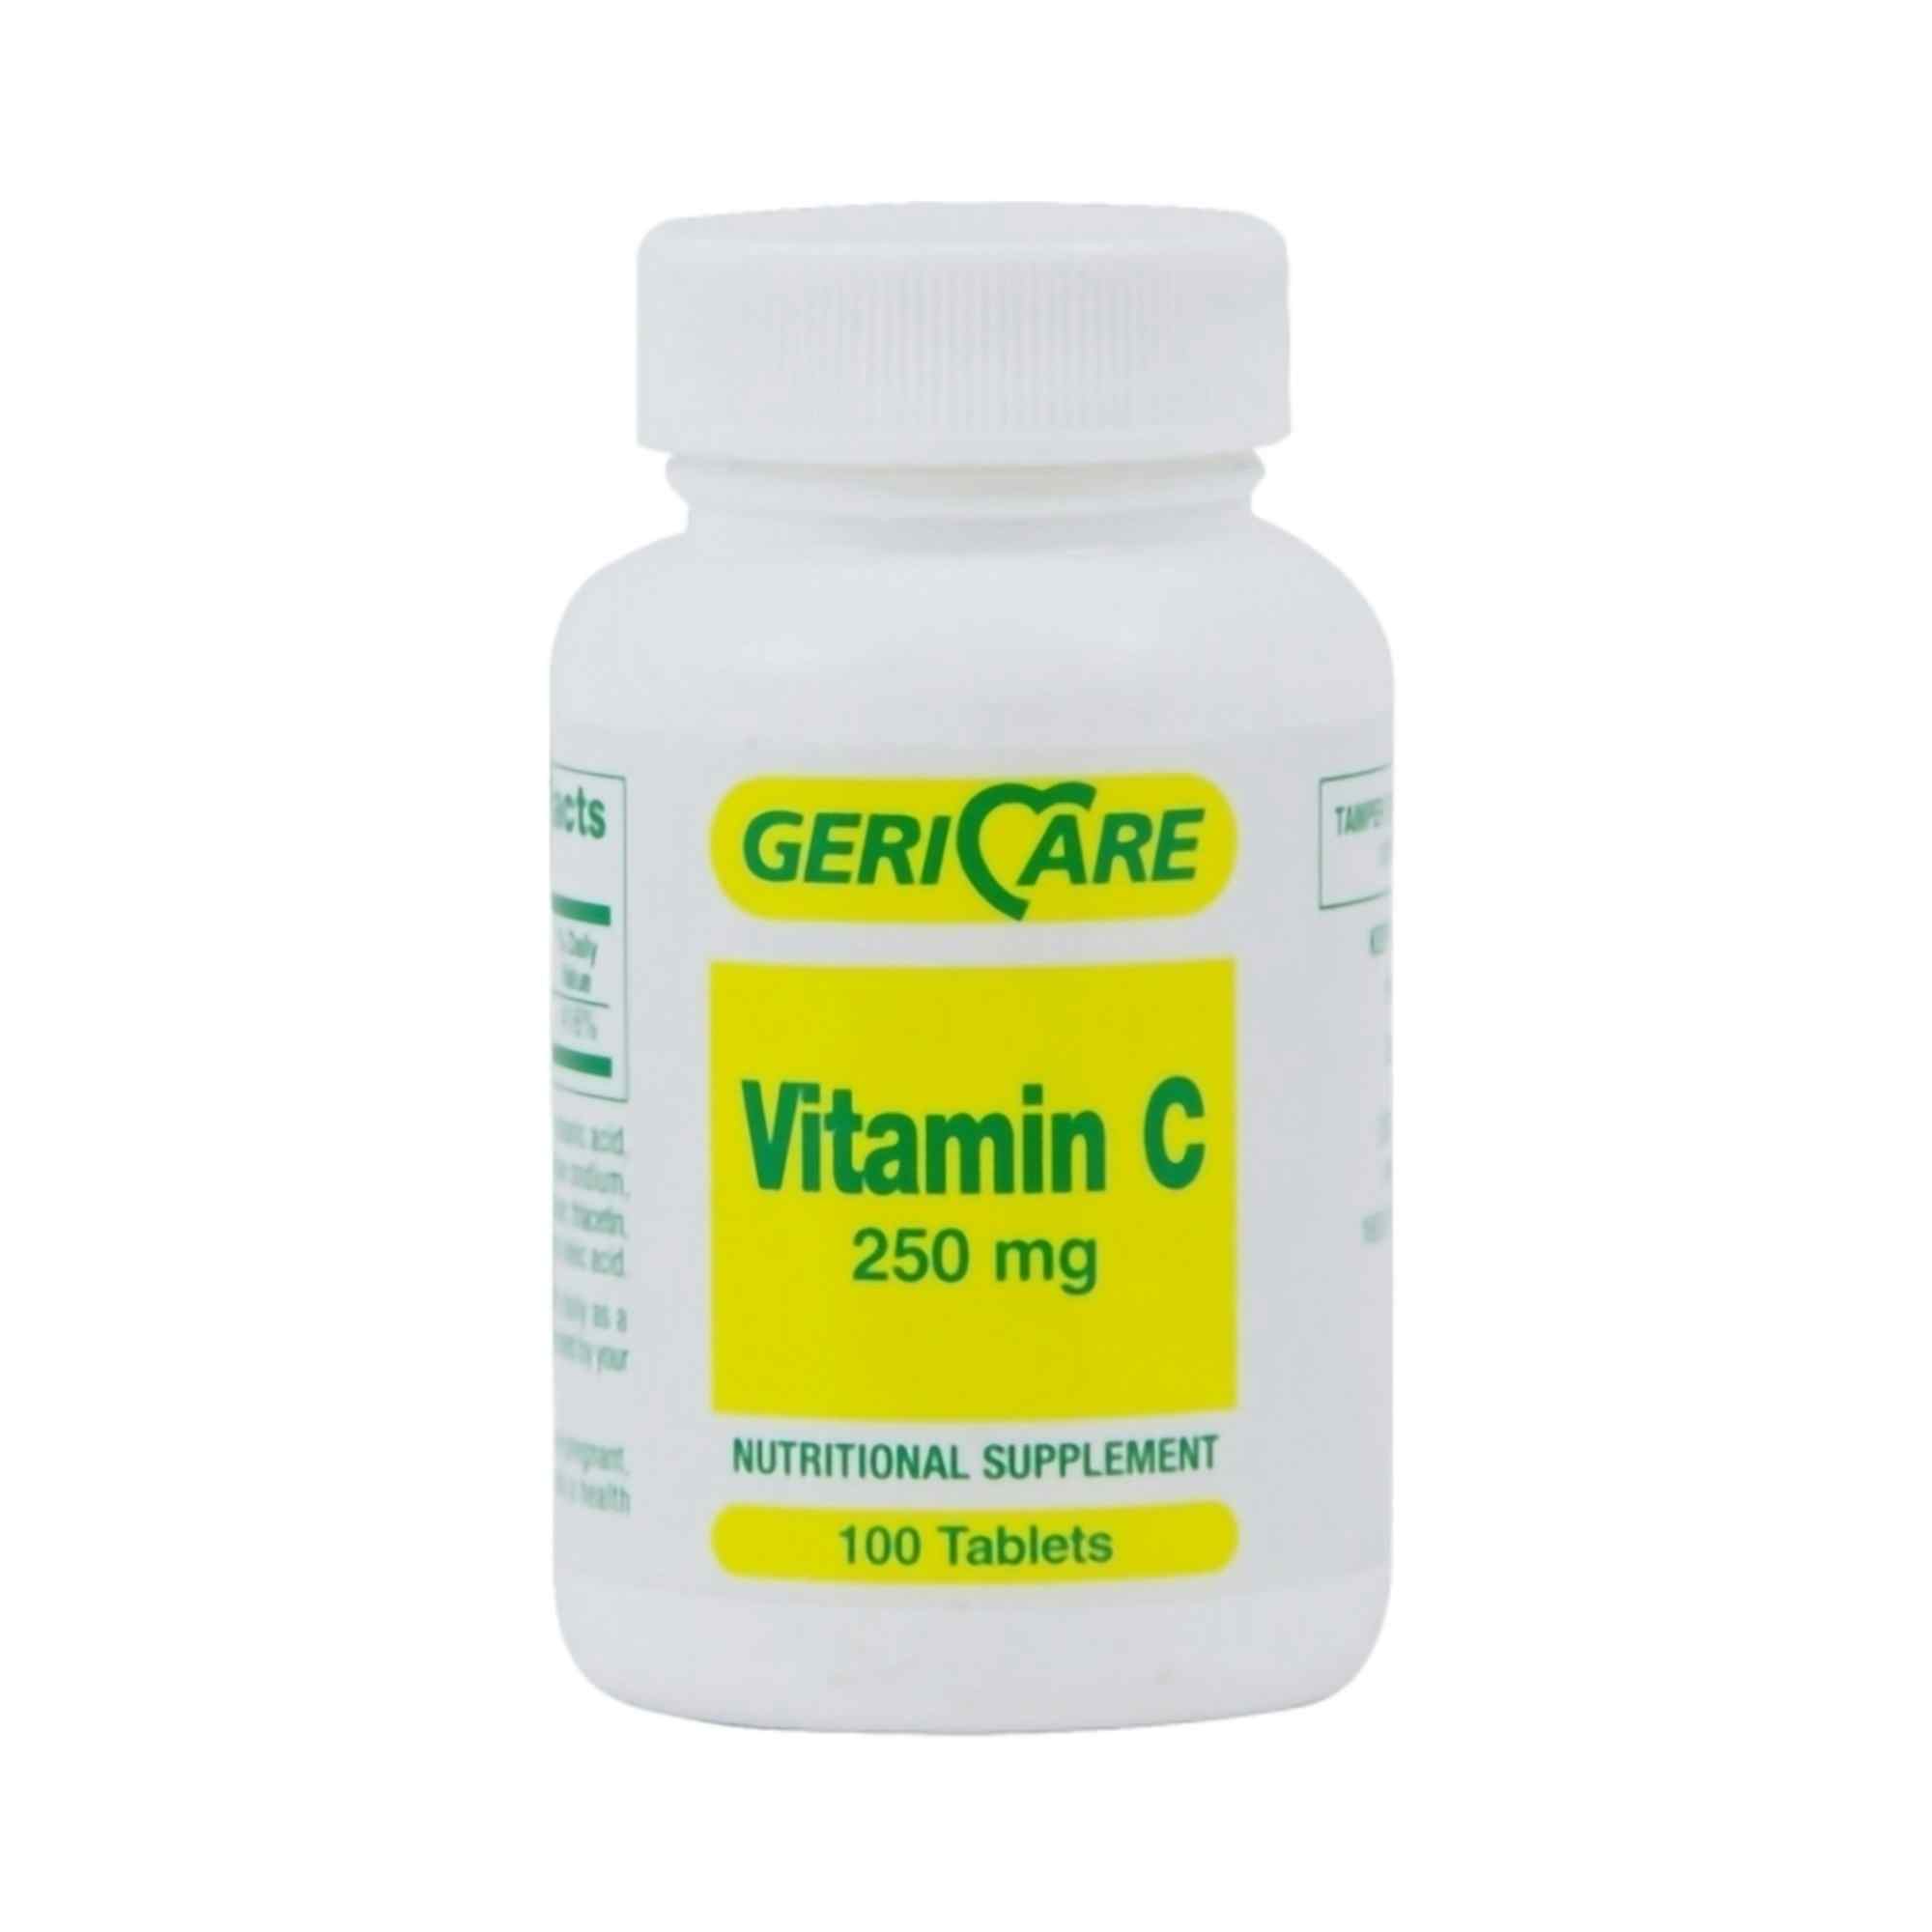 Geri-Care Vitamin C Nutritional Supplement, 250 mg, 100 Tablets, 831-01-GCP, 1 Bottle